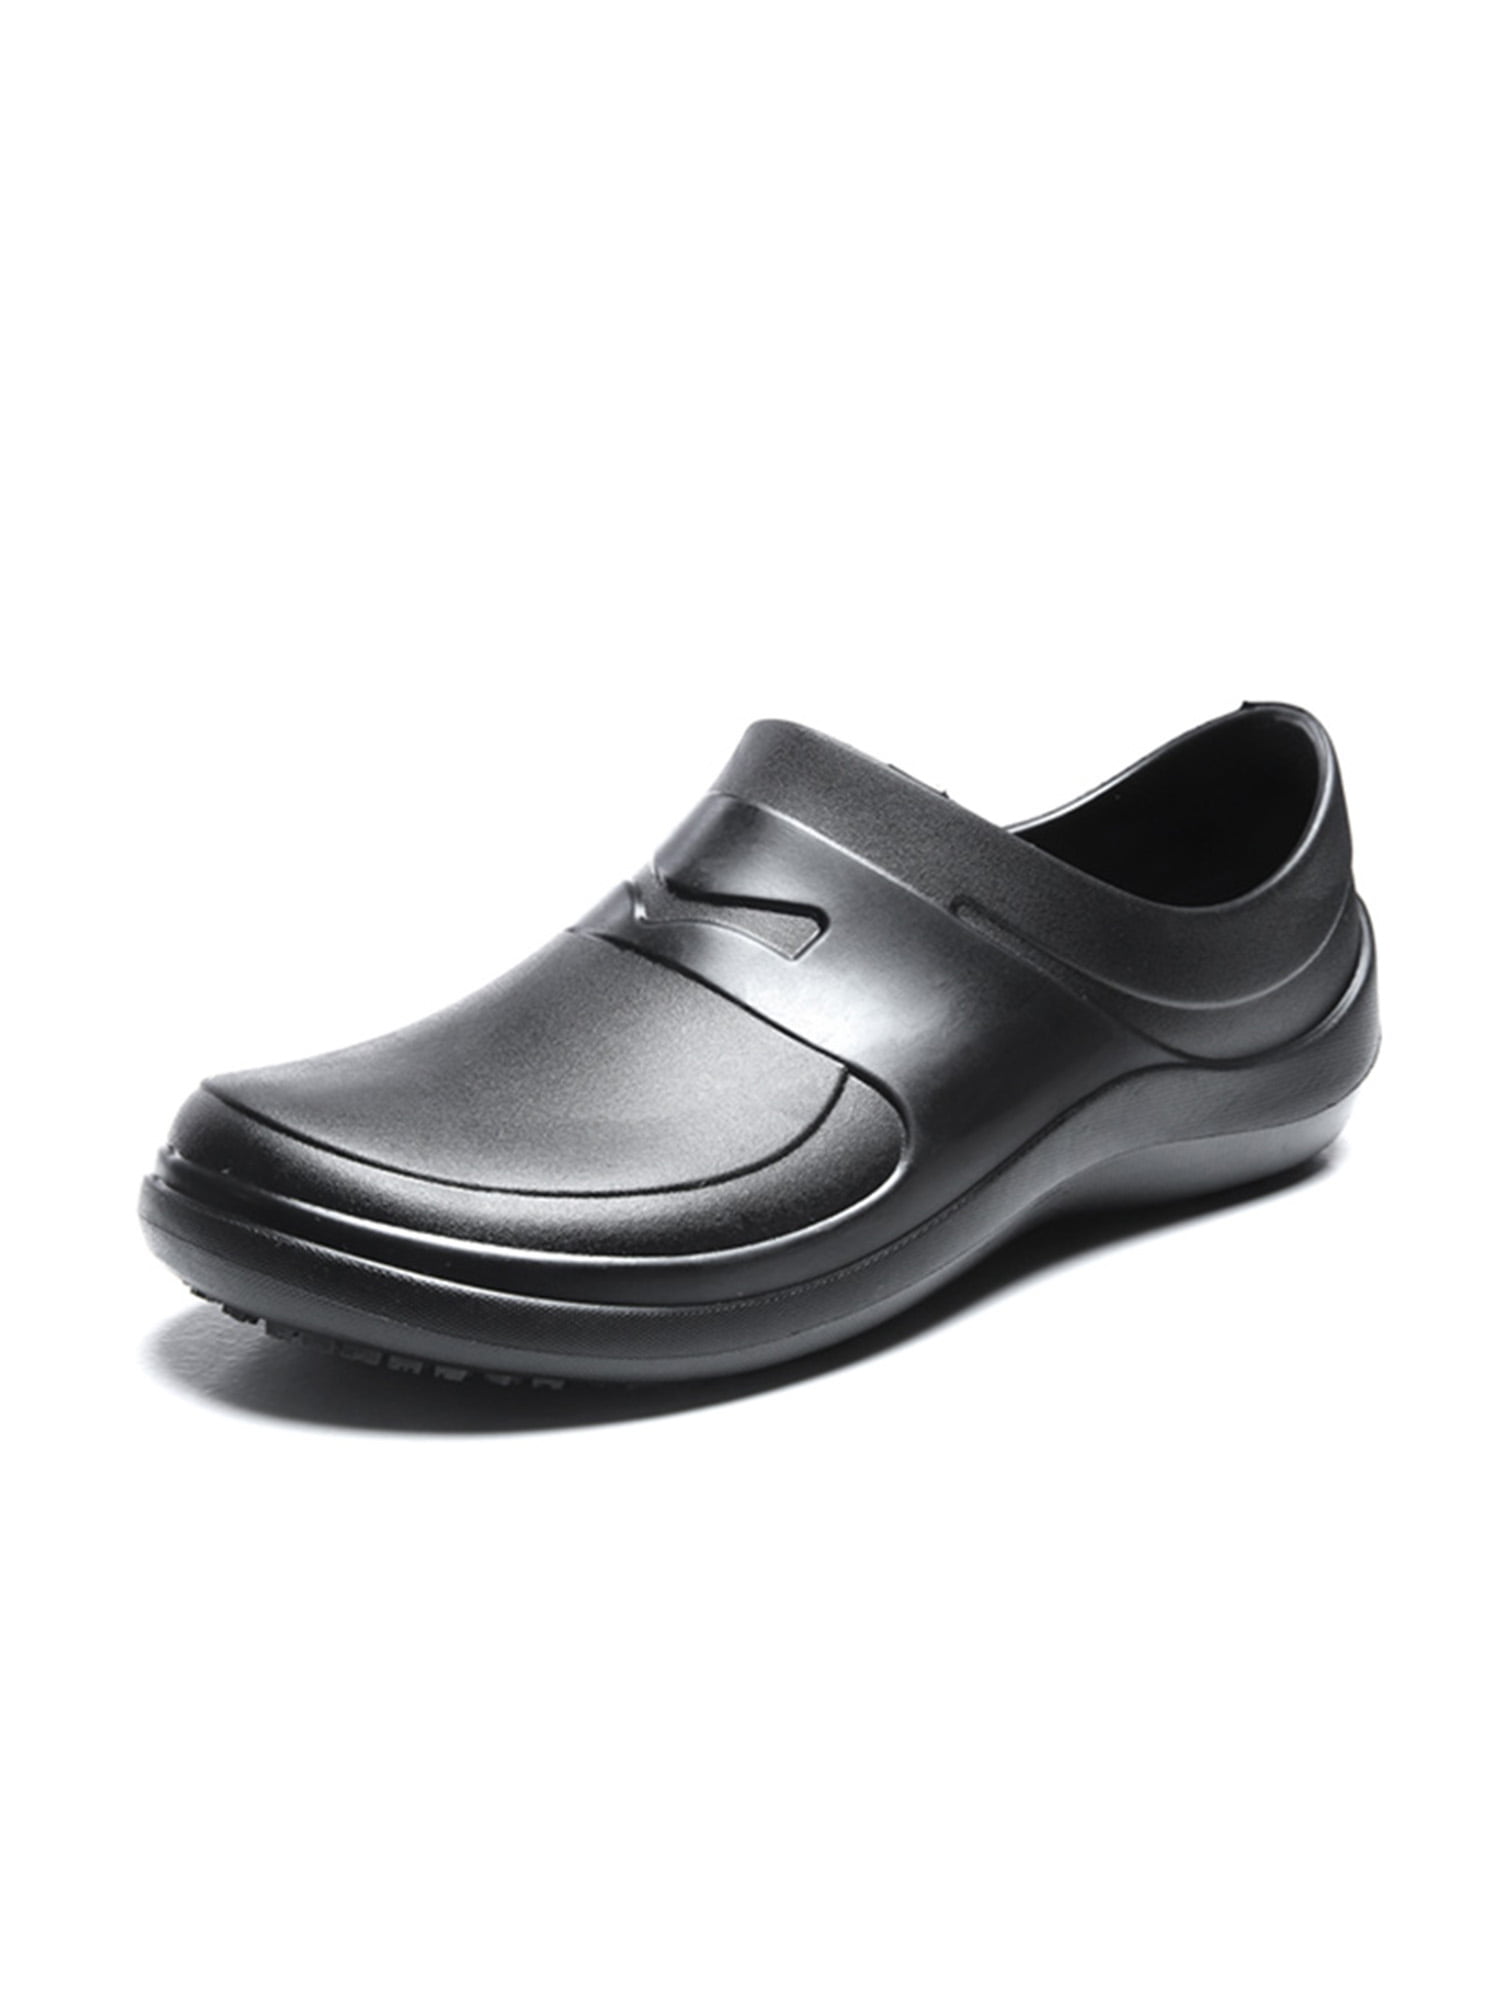 Nursing or Kitchen Chef Shoe Men Women White Clog Slip Resistant Work Shoes 